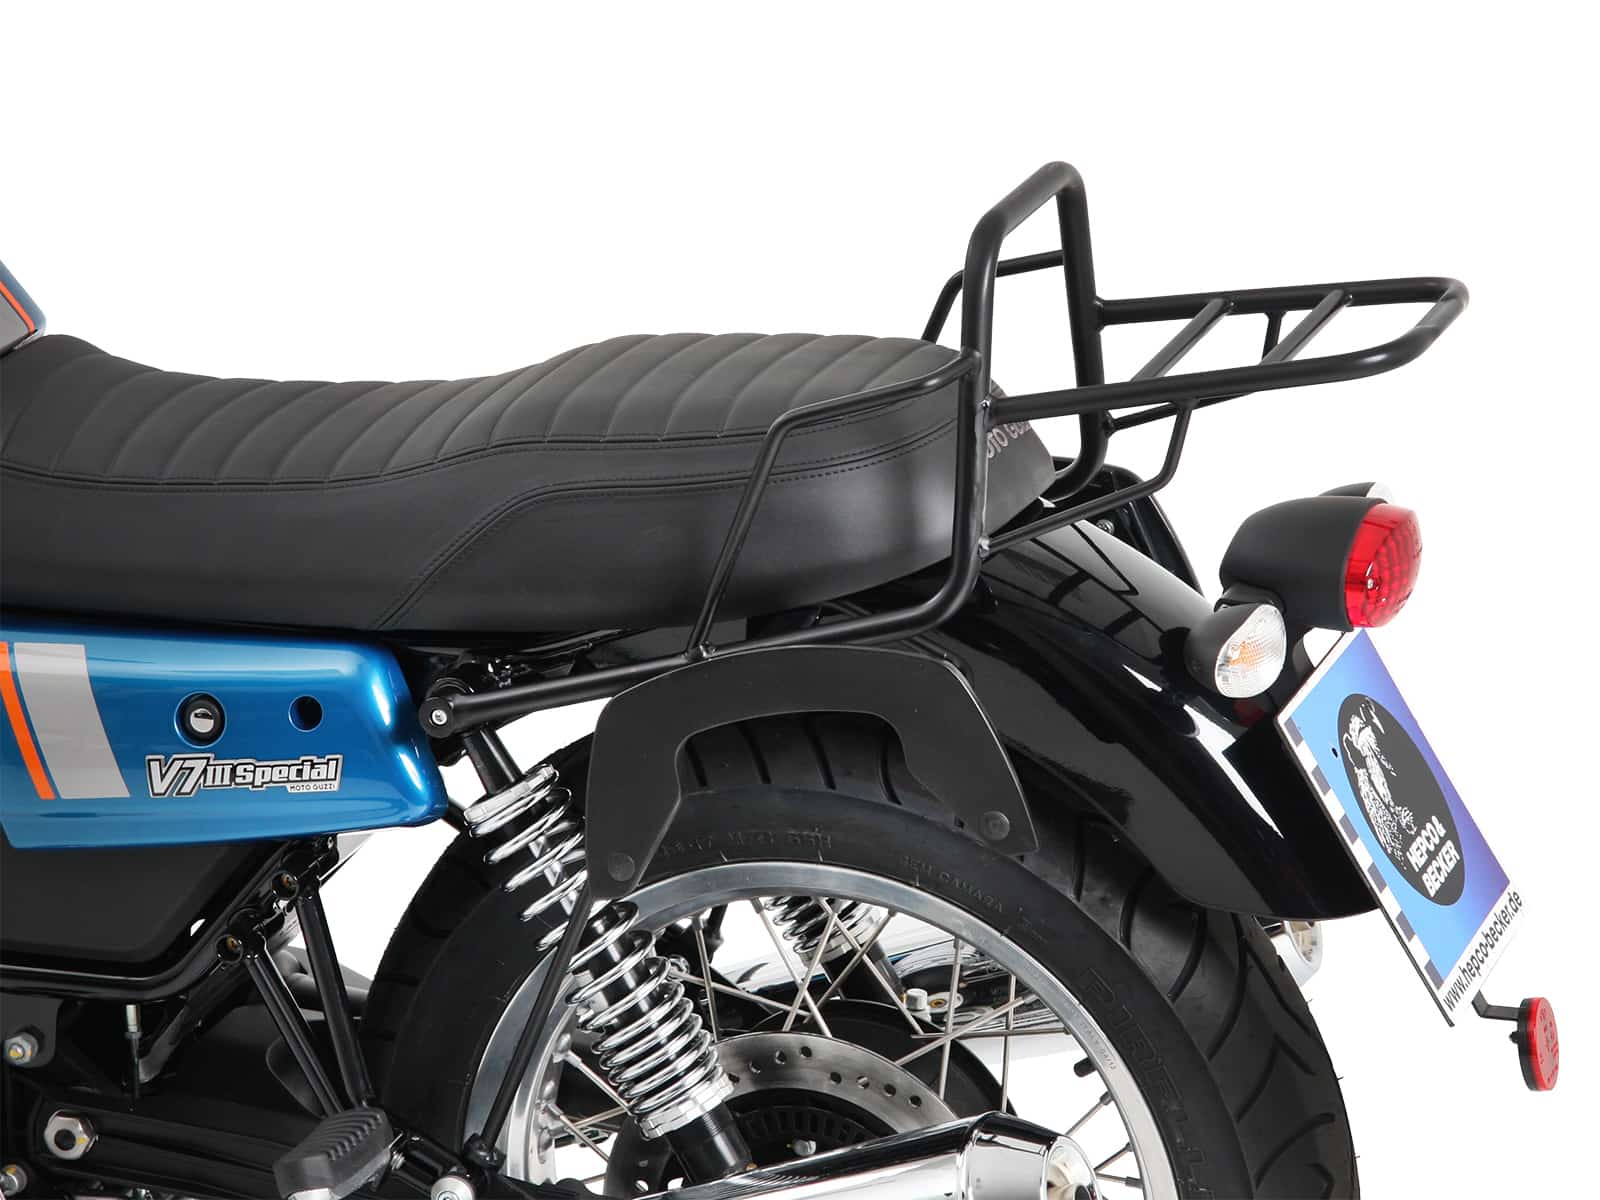 C-Bow sidecarrier chrome for Moto Guzzi V7 III (Carbon